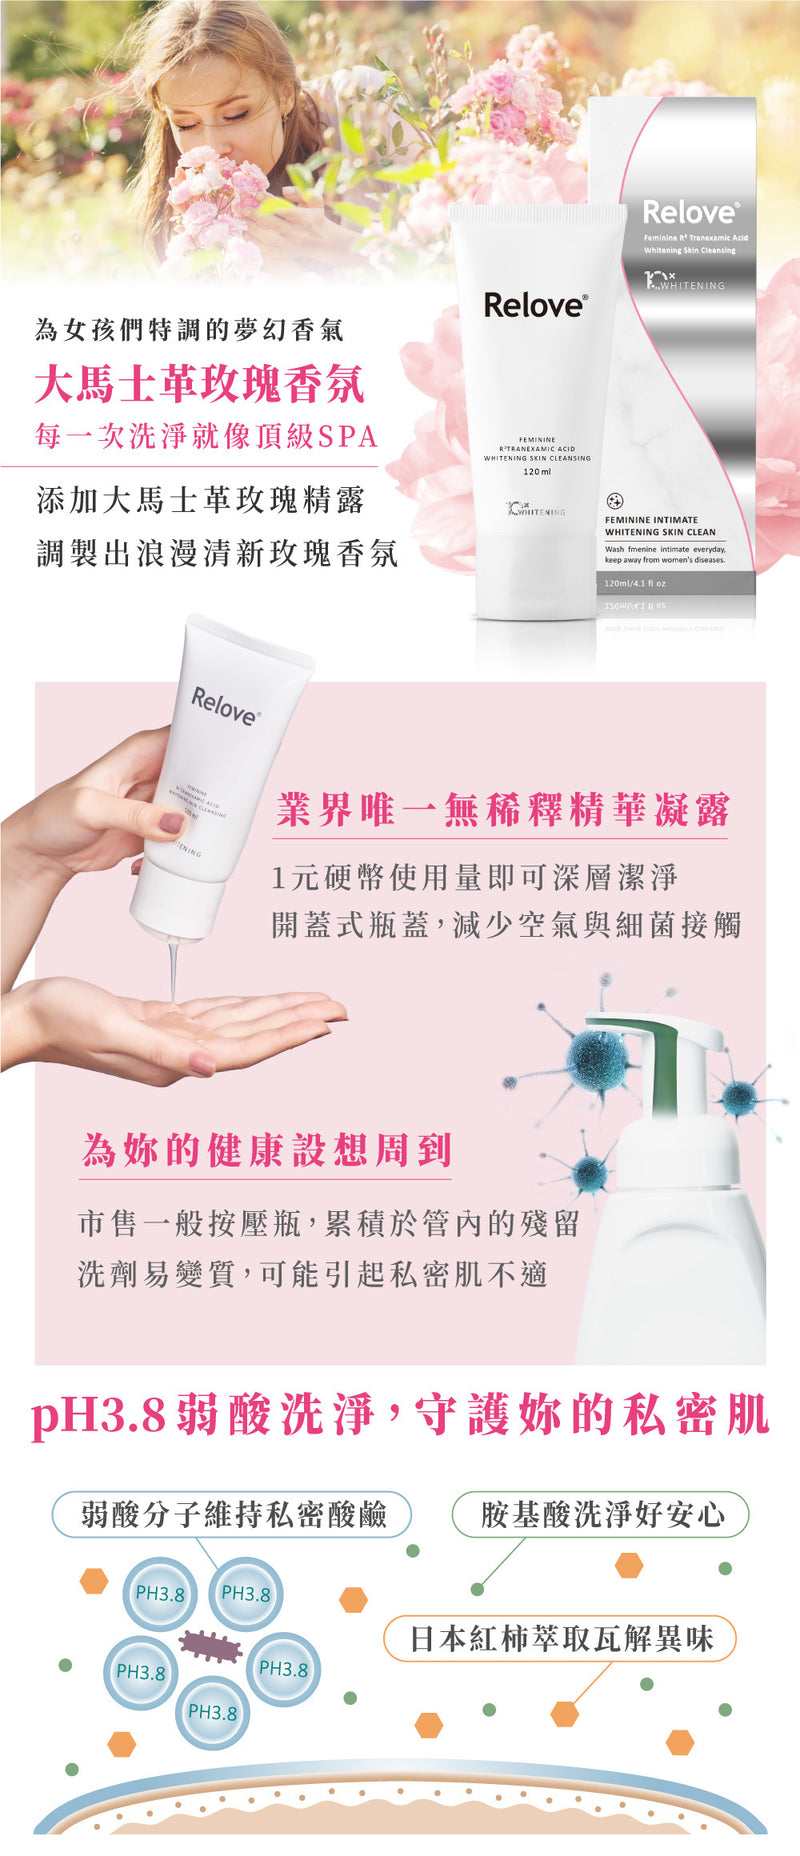 Relove(台灣) Feminine Skin Cleansing Gel 私密肌傳明酸美白潔淨精華凝露(120ml)